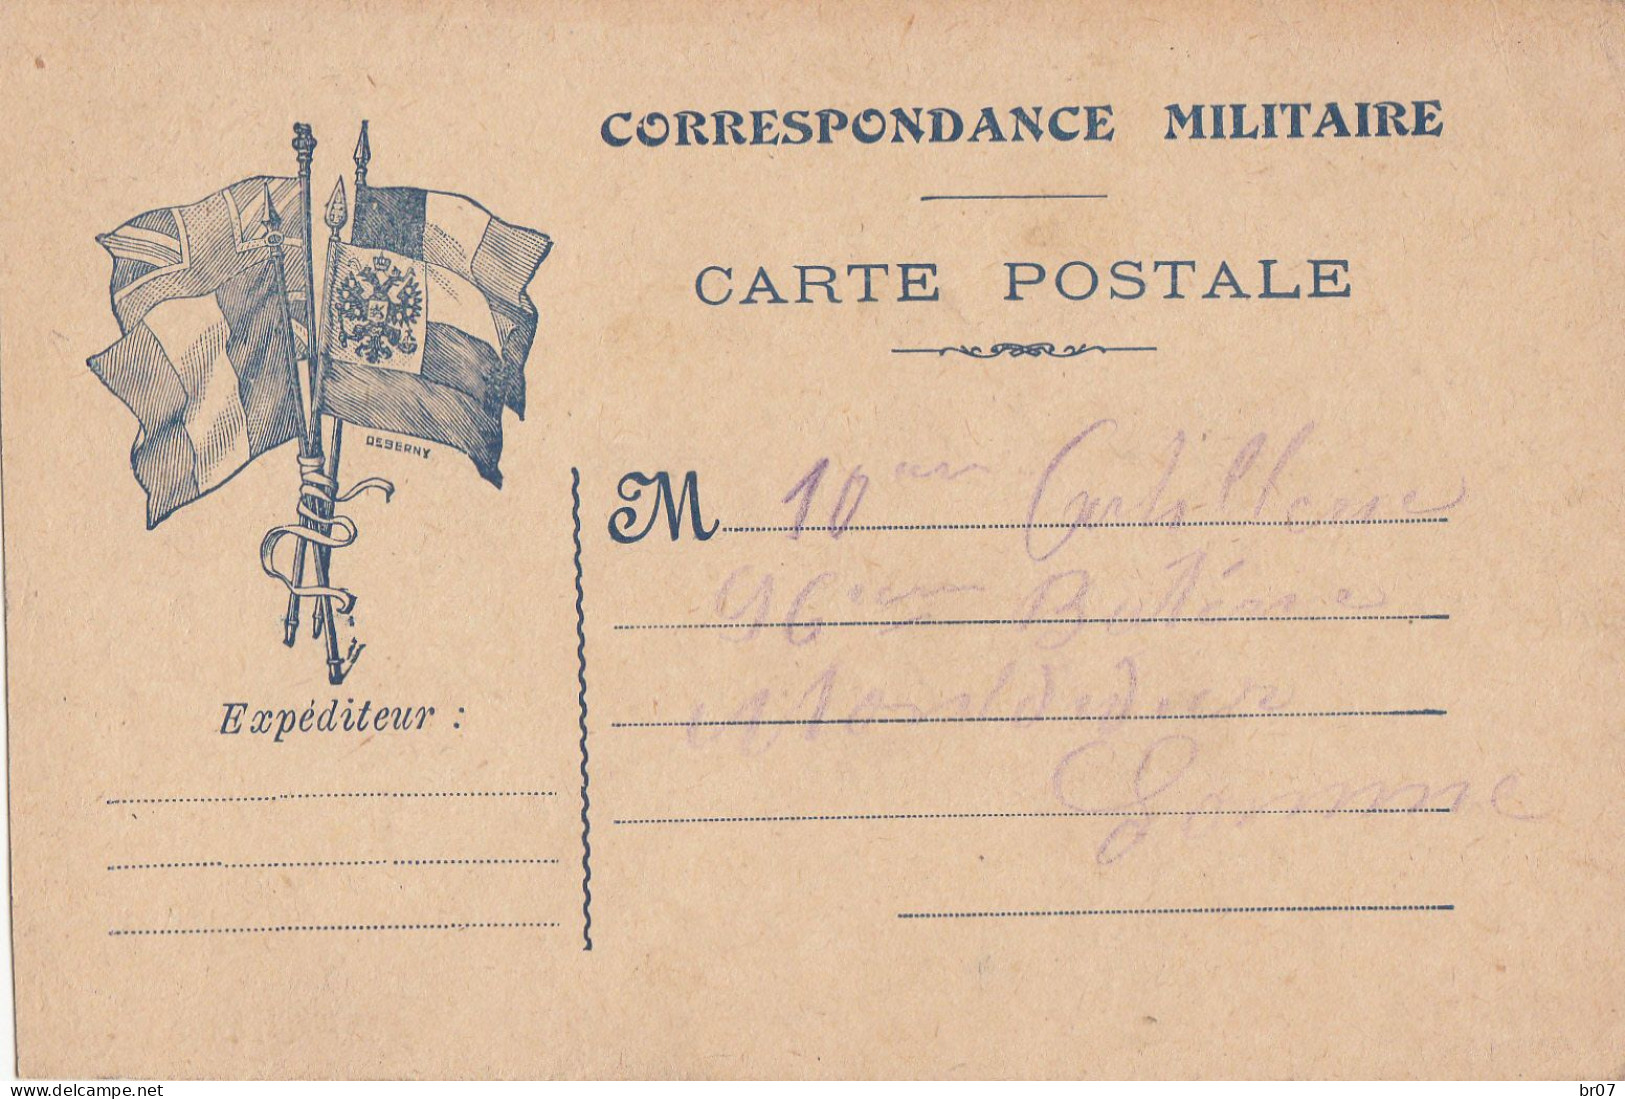 CPFM ILLUSTRATION DRAPEAUX SIGNE DEBERNY VERSO DATEE 1916 - Guerre De 1914-18